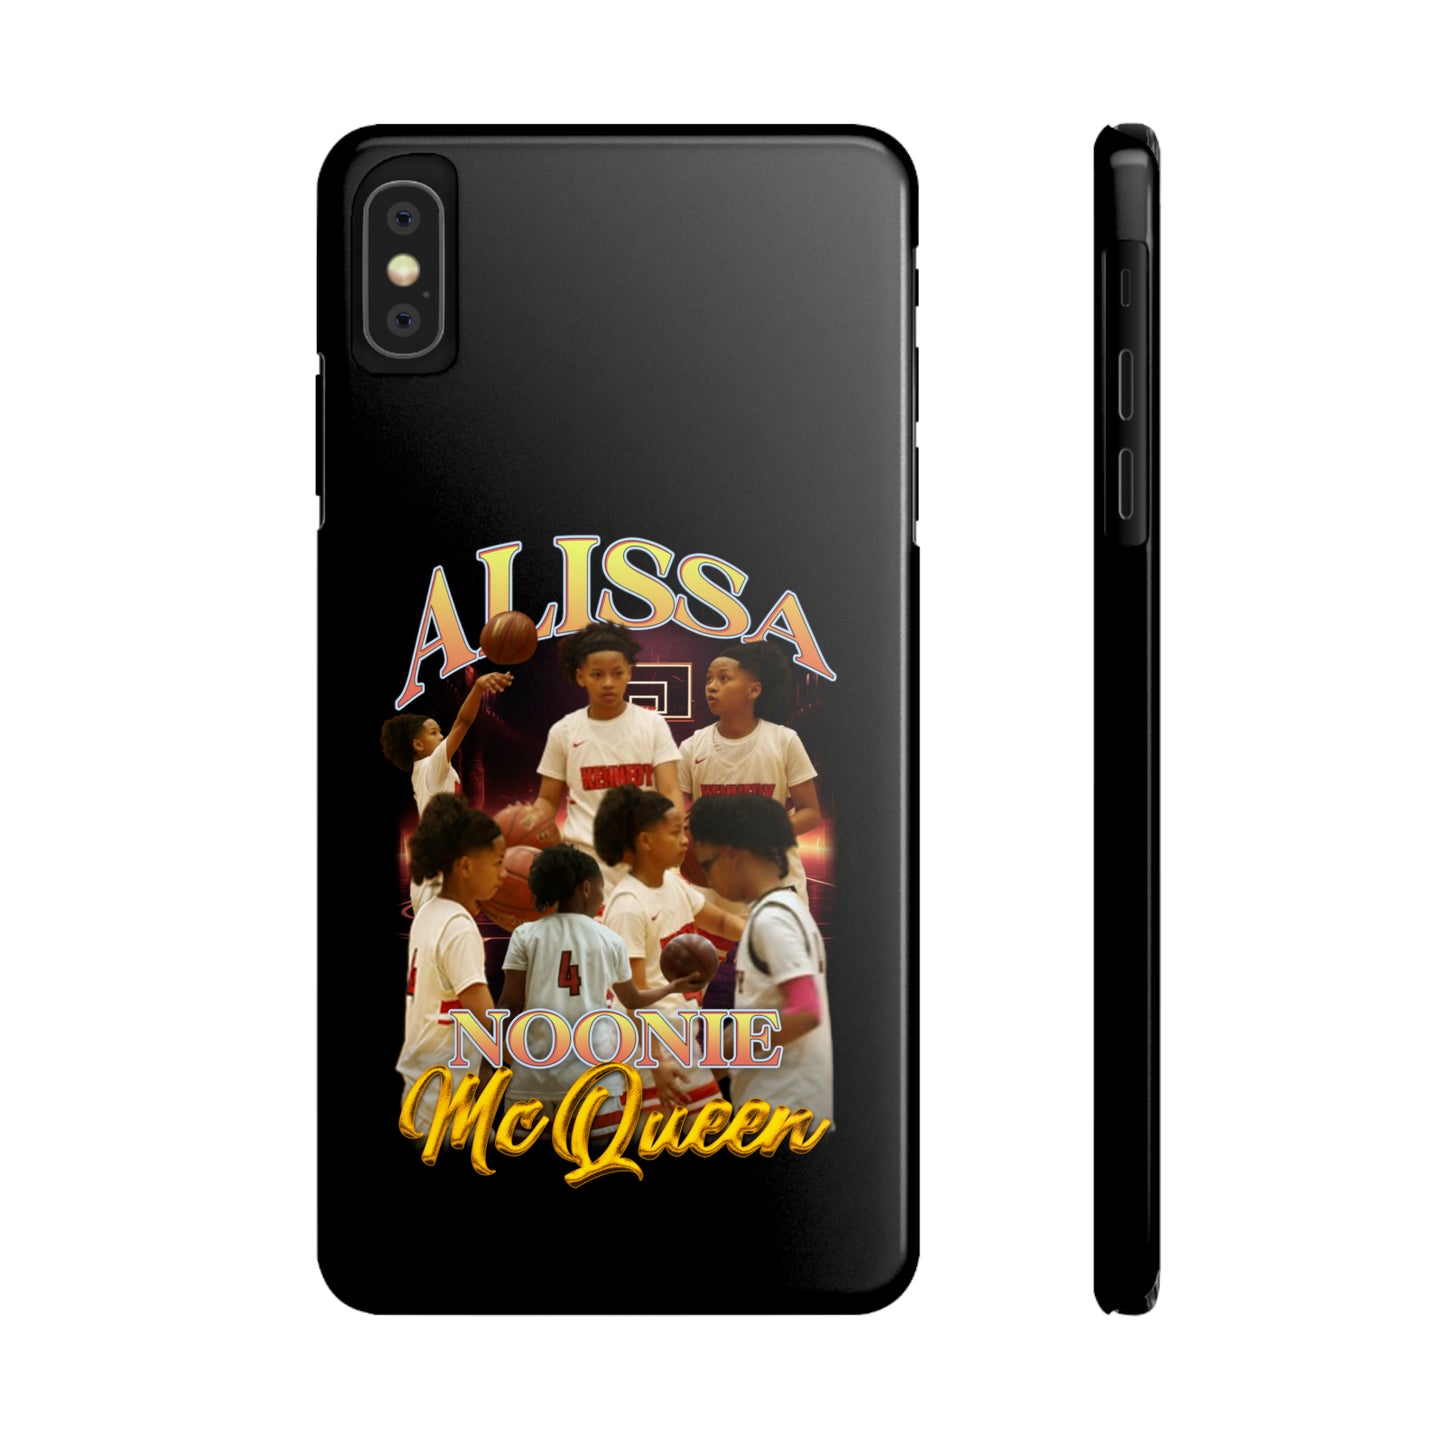 Alissa Noonie McQueen Phone Case